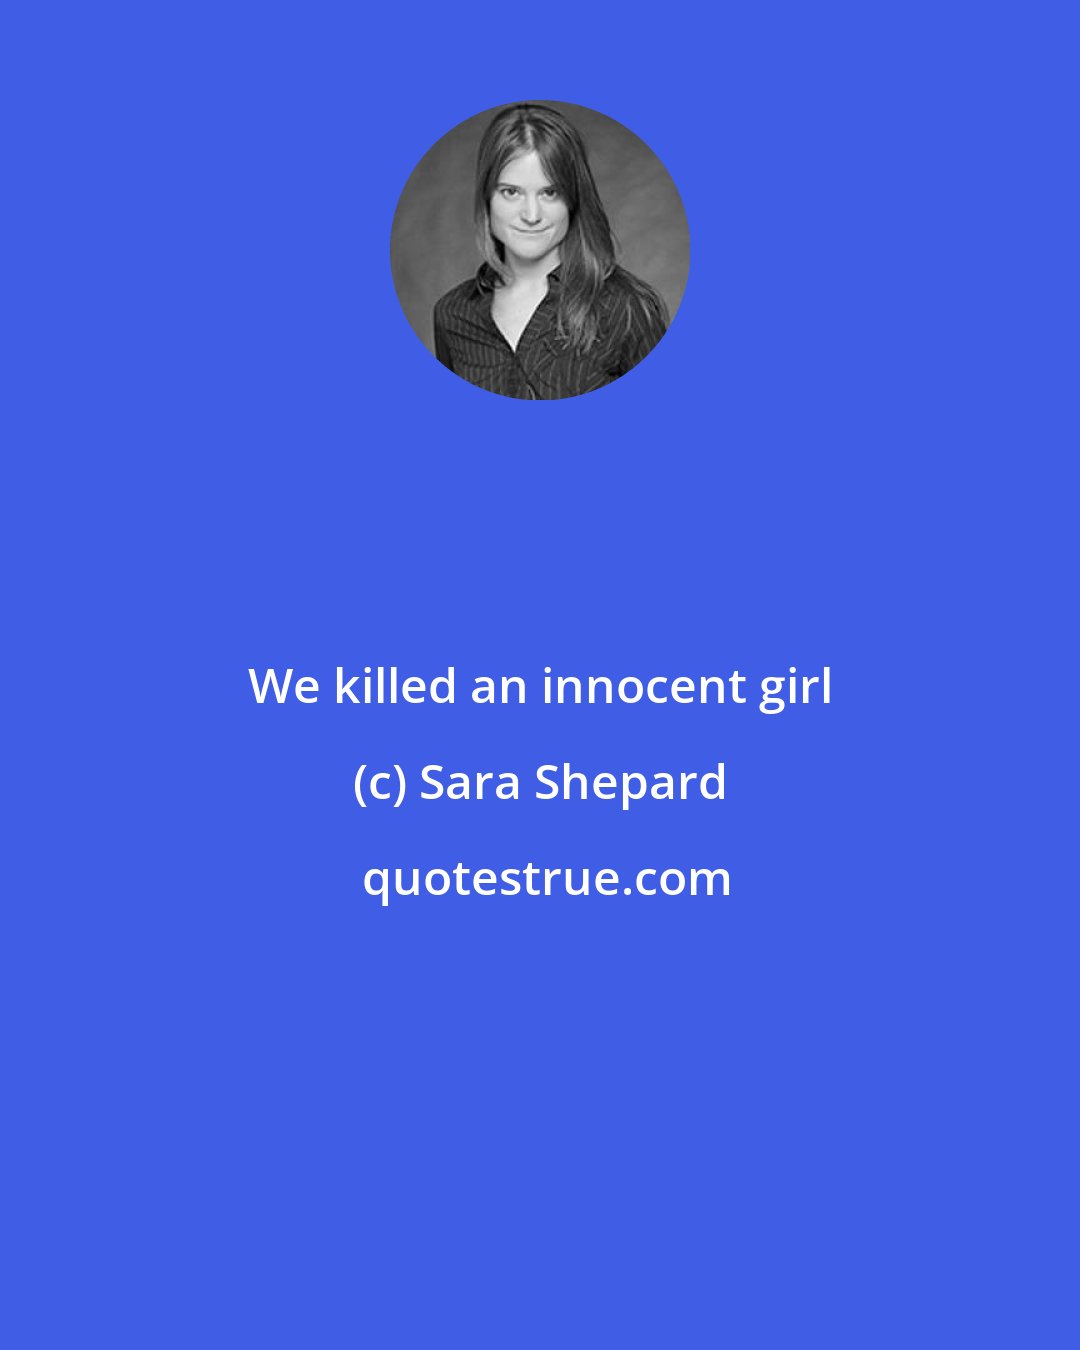 Sara Shepard: We killed an innocent girl